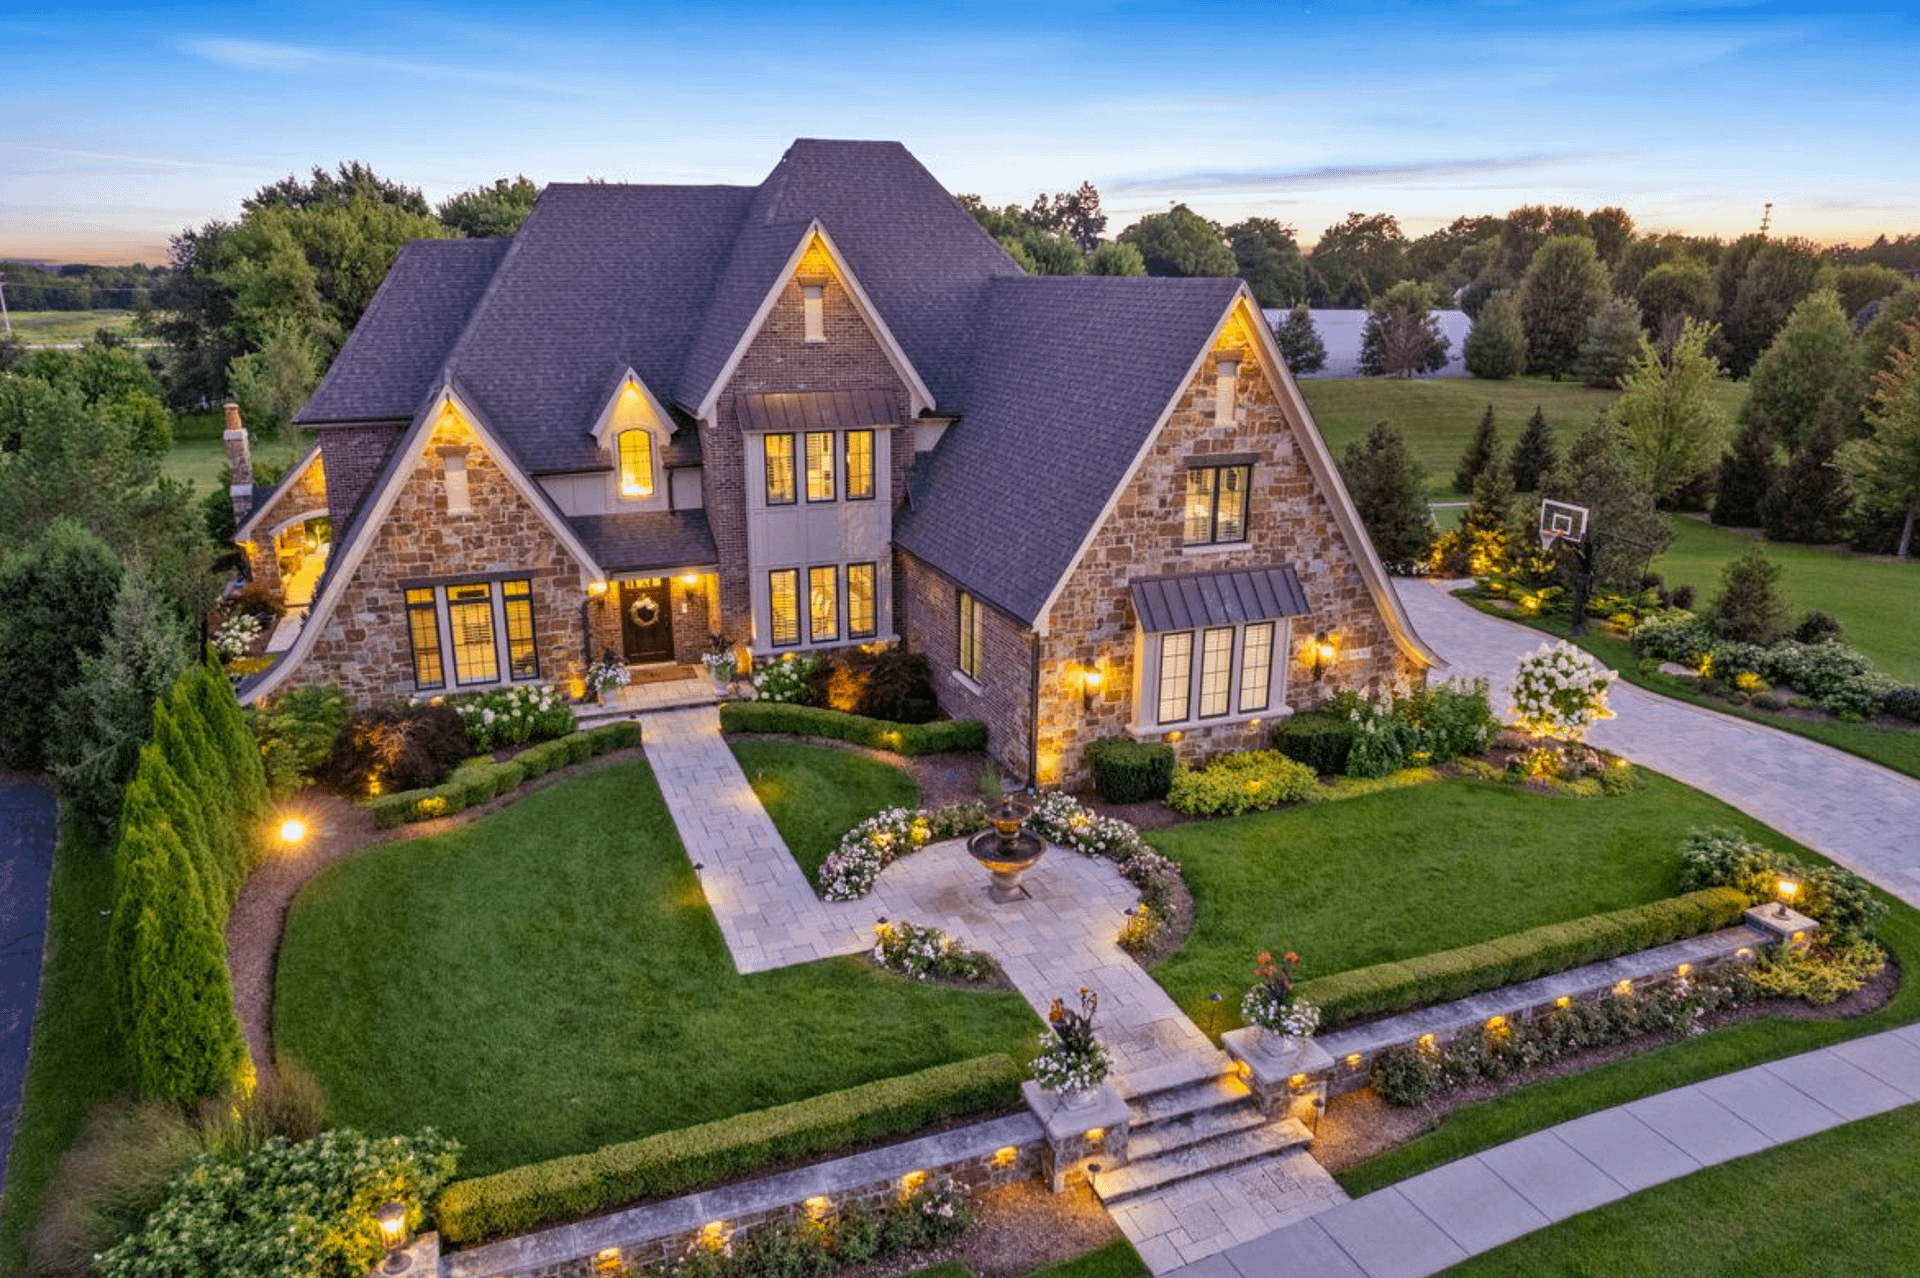 Brick & Stone Home In Saint Charles, Illinois (PHOTOS)